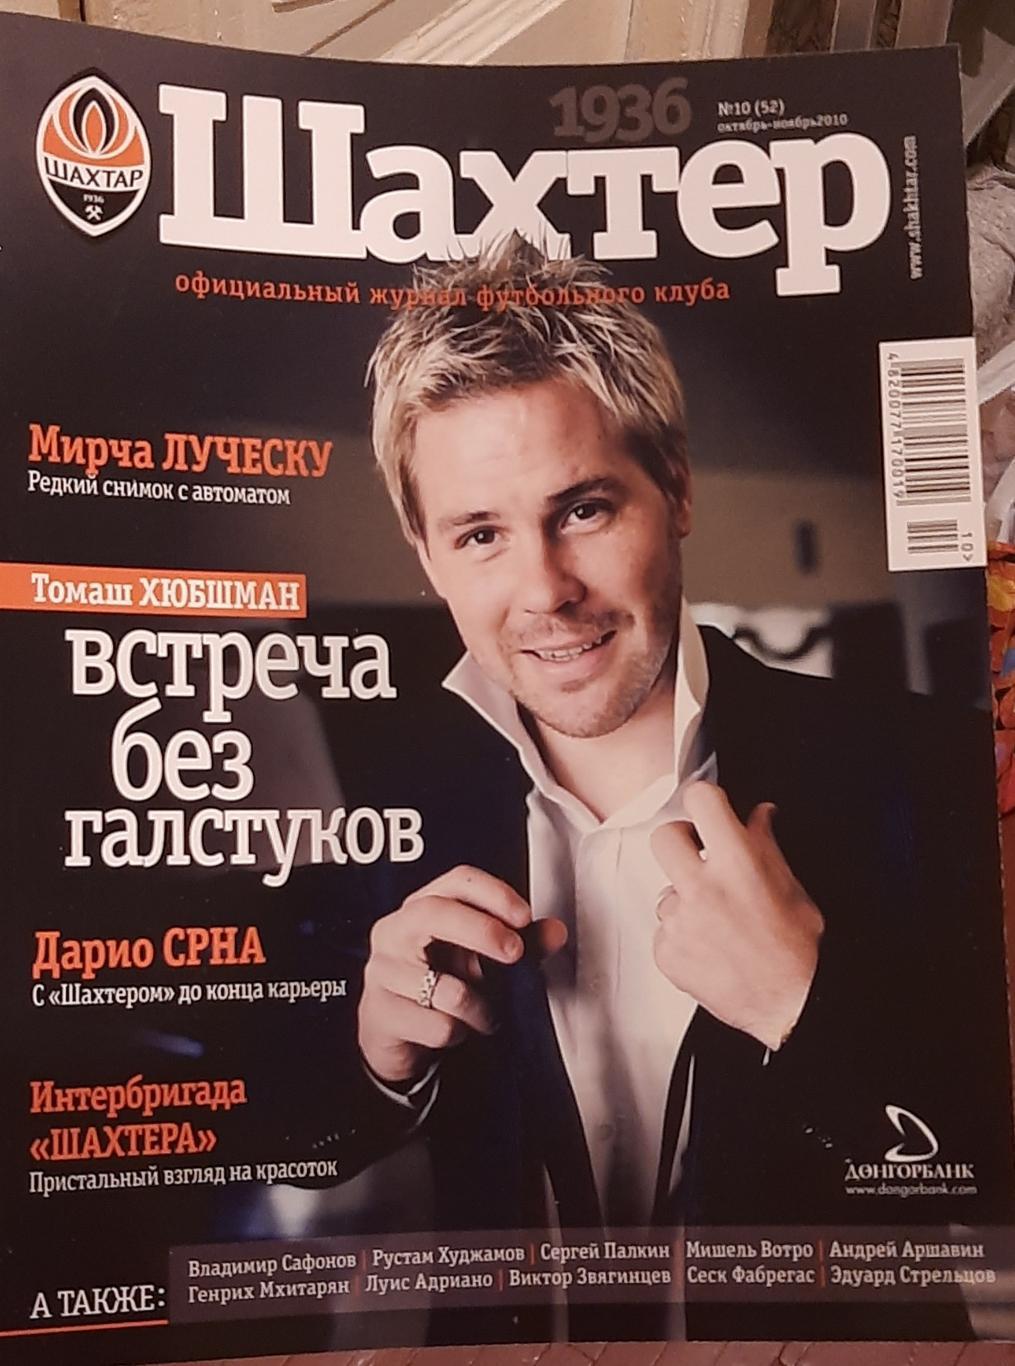 ФК Шахтёр. Официальный клубный журнал. N 10. Октябрь-ноябрь 2010